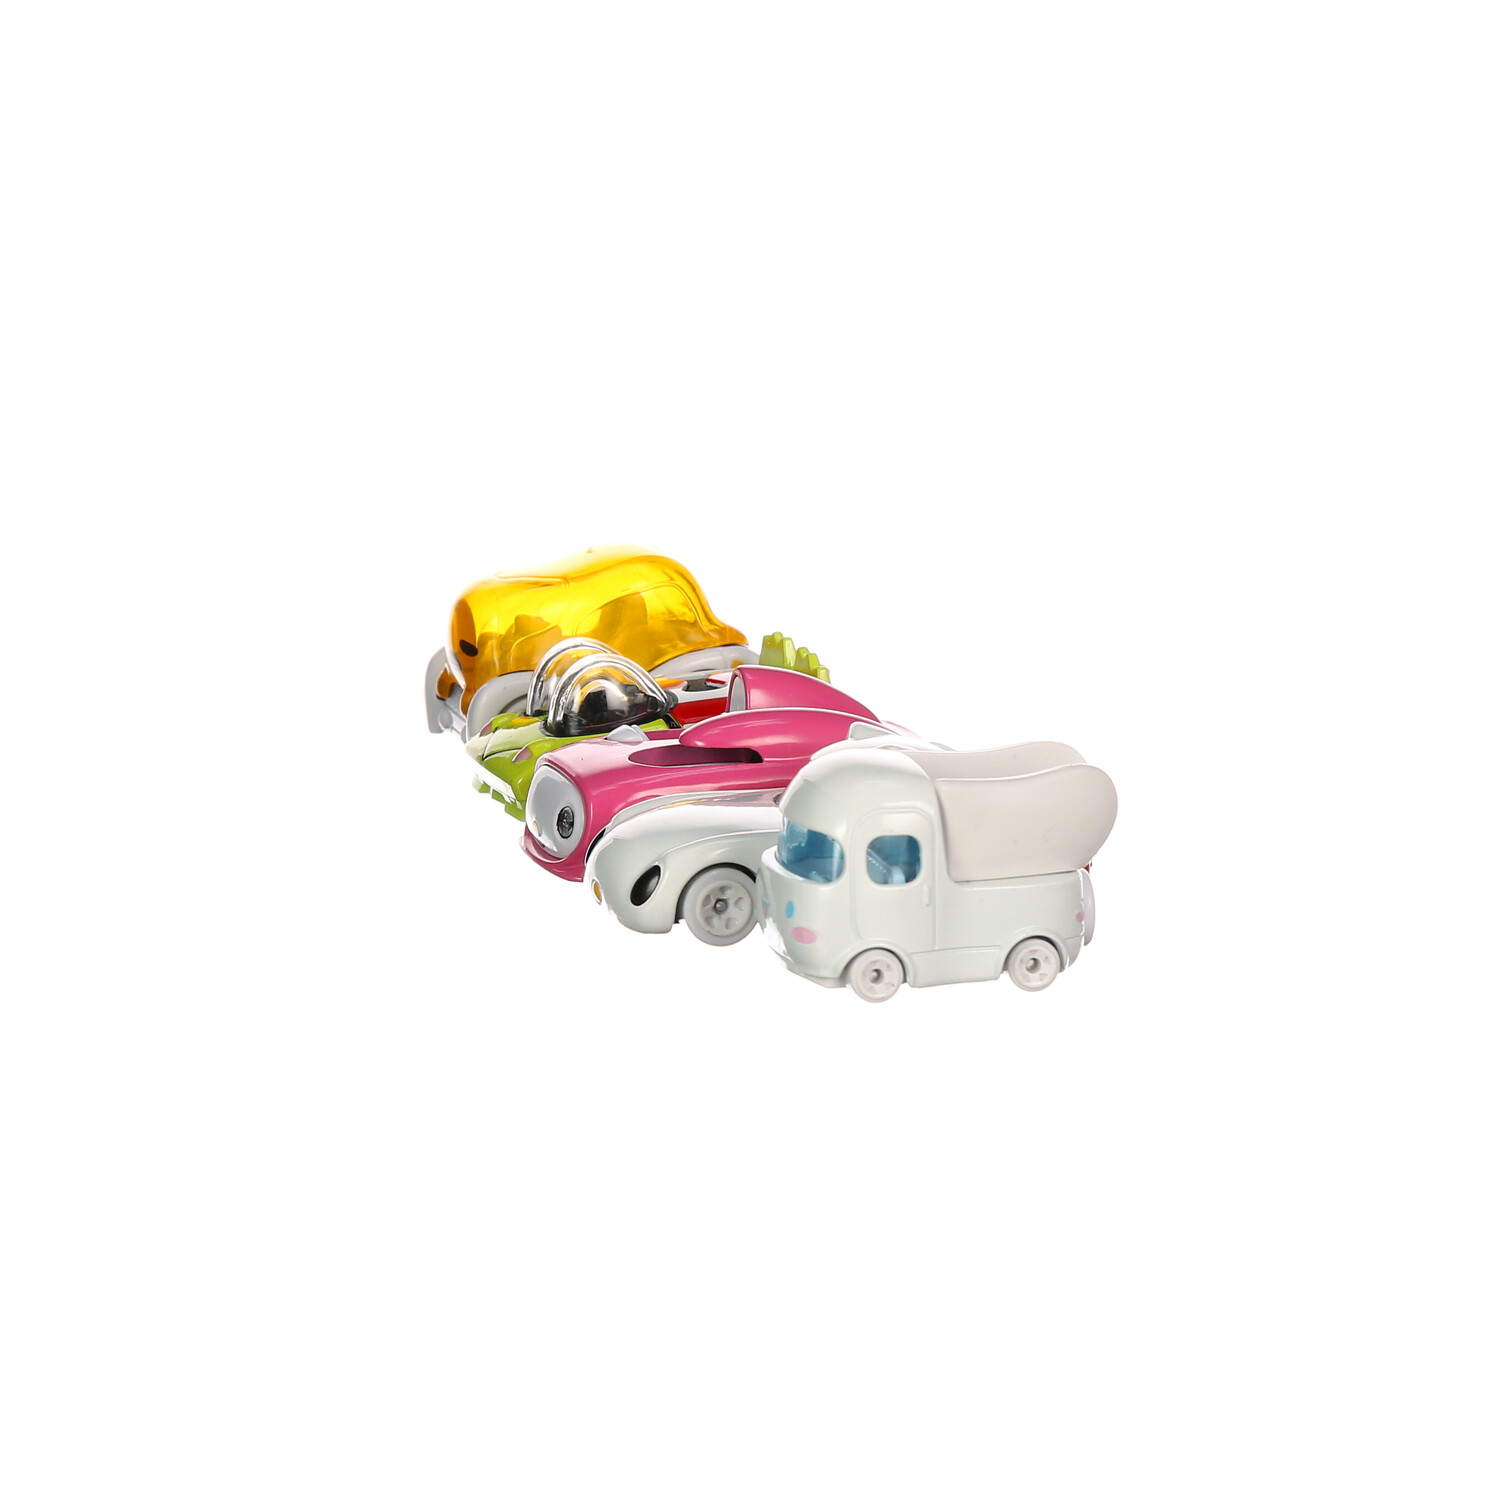 Sanrio Hot Wheels Character Cars Hello Kitty - Random Sh*t » Hot Wheels -  Wii Play Games West